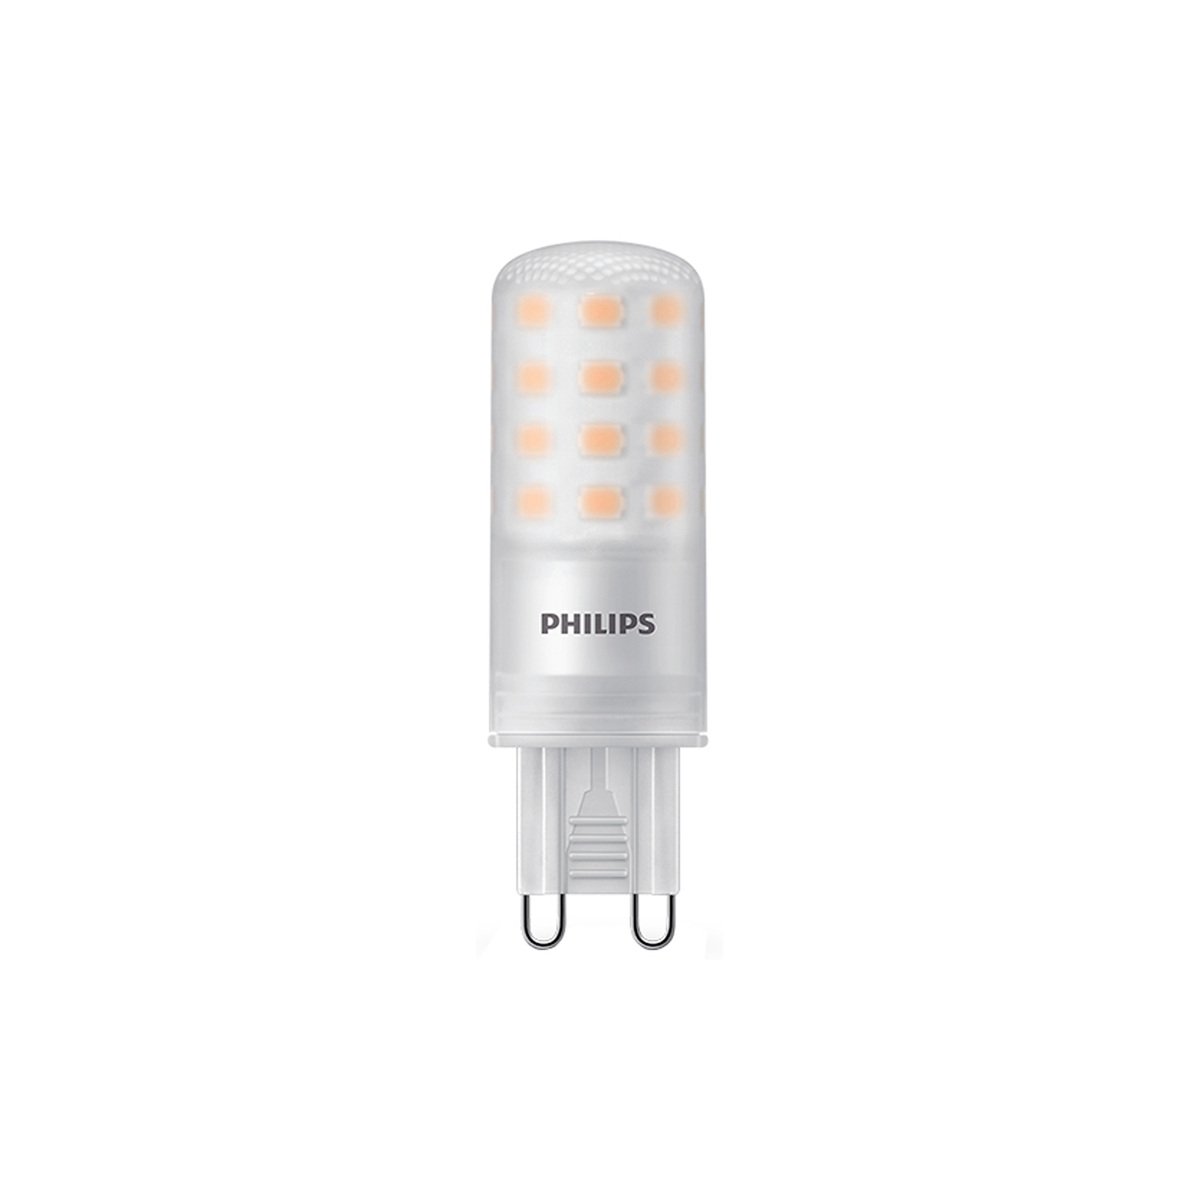 Nuura Philips bulb 4W 480lm, | Finnish Design Shop